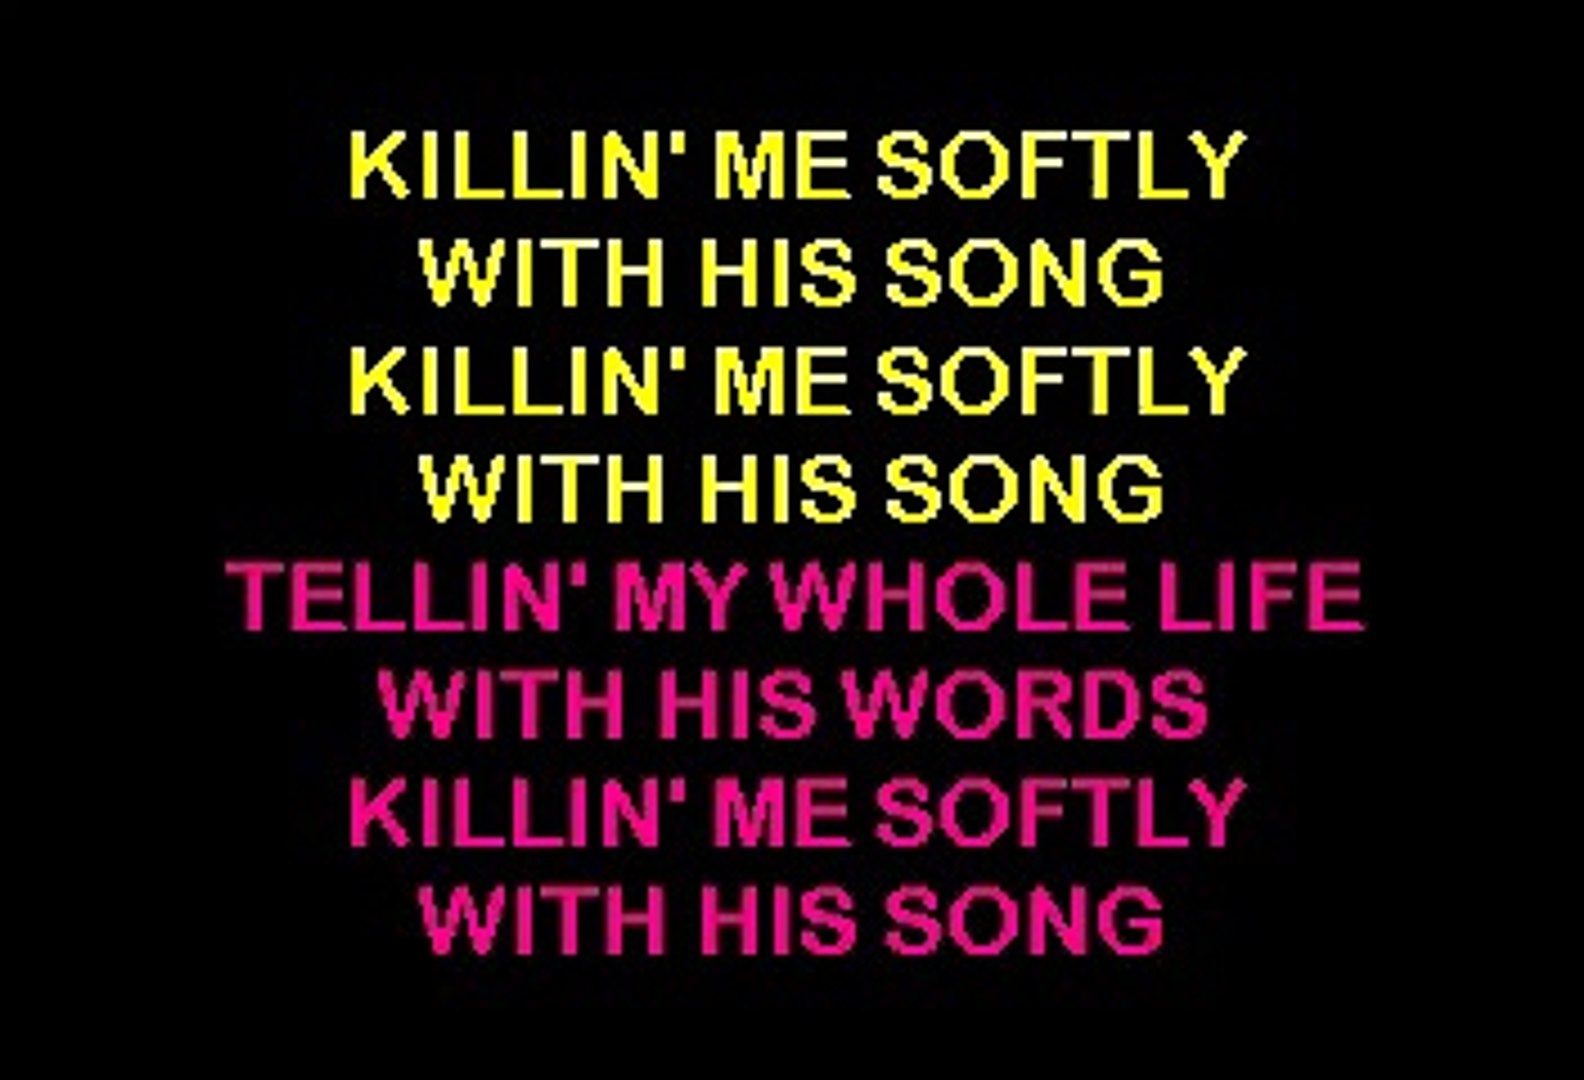 SC2064-06 - Fugees, The - Killing Me Softly.mpg KARAOKE KARAOKE - video  Dailymotion